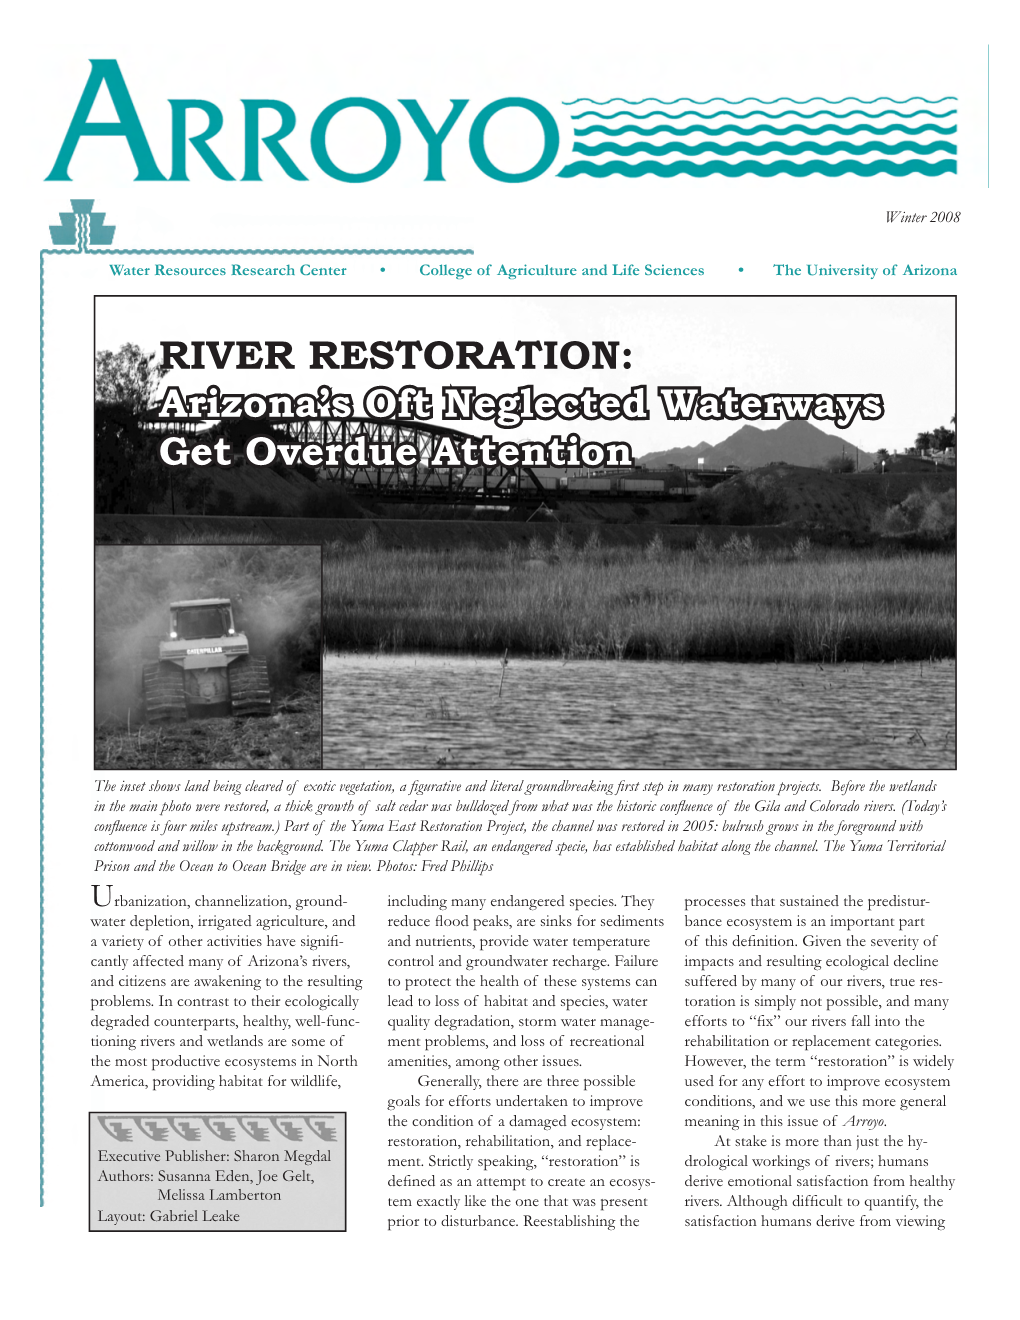 RIVER RESTORATION: Arizona’S Oft Neglected Waterways Get Overdue Attention